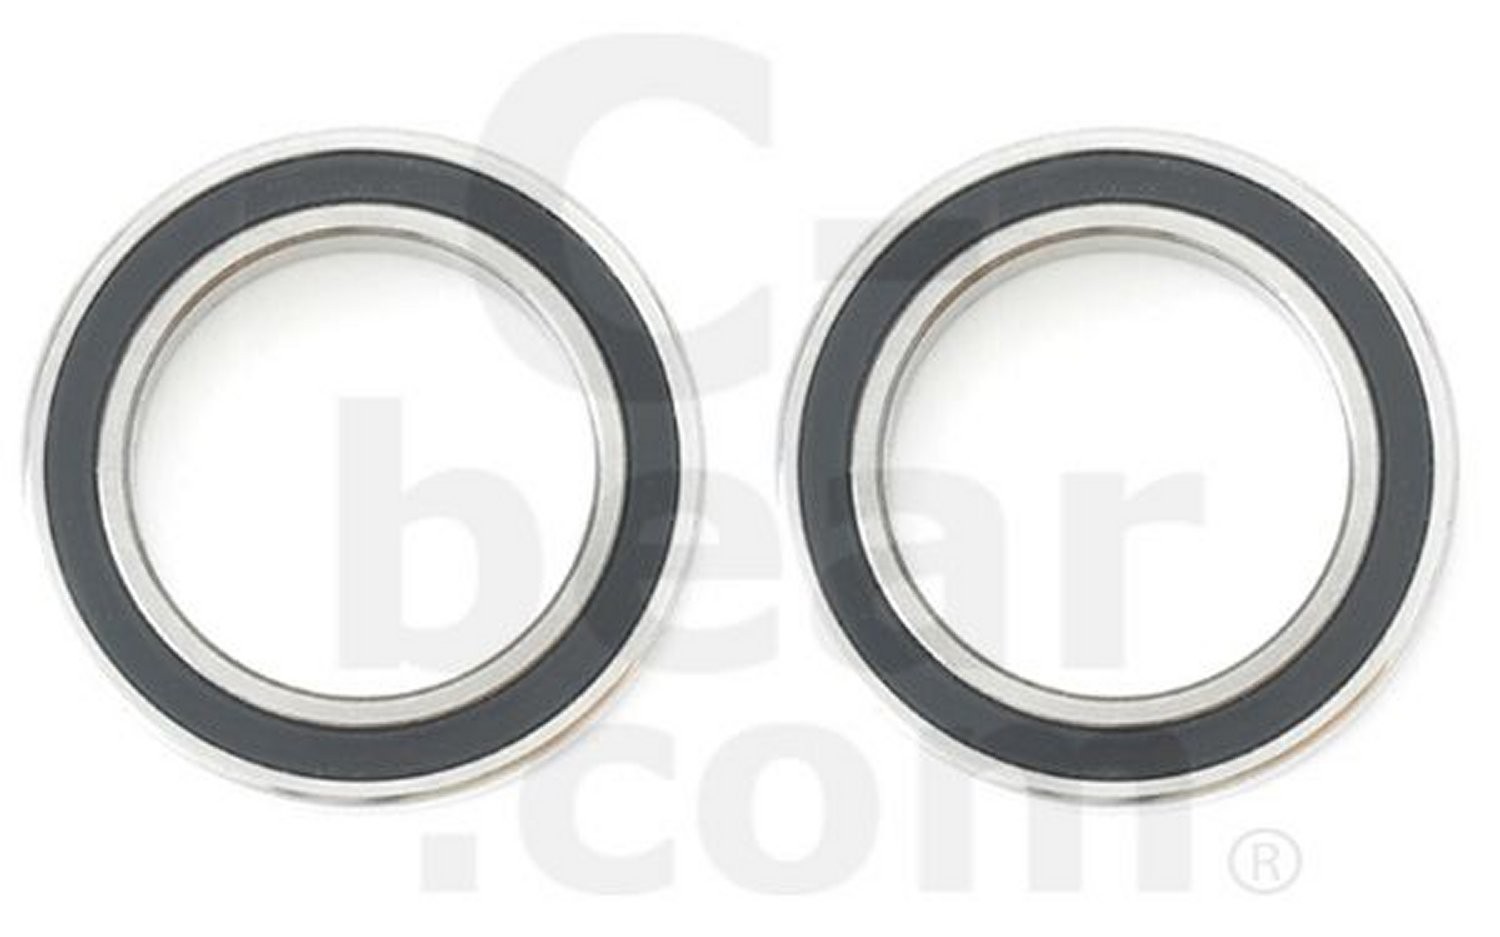 C-Bear BB30 Ceramic bearing set Road seals.